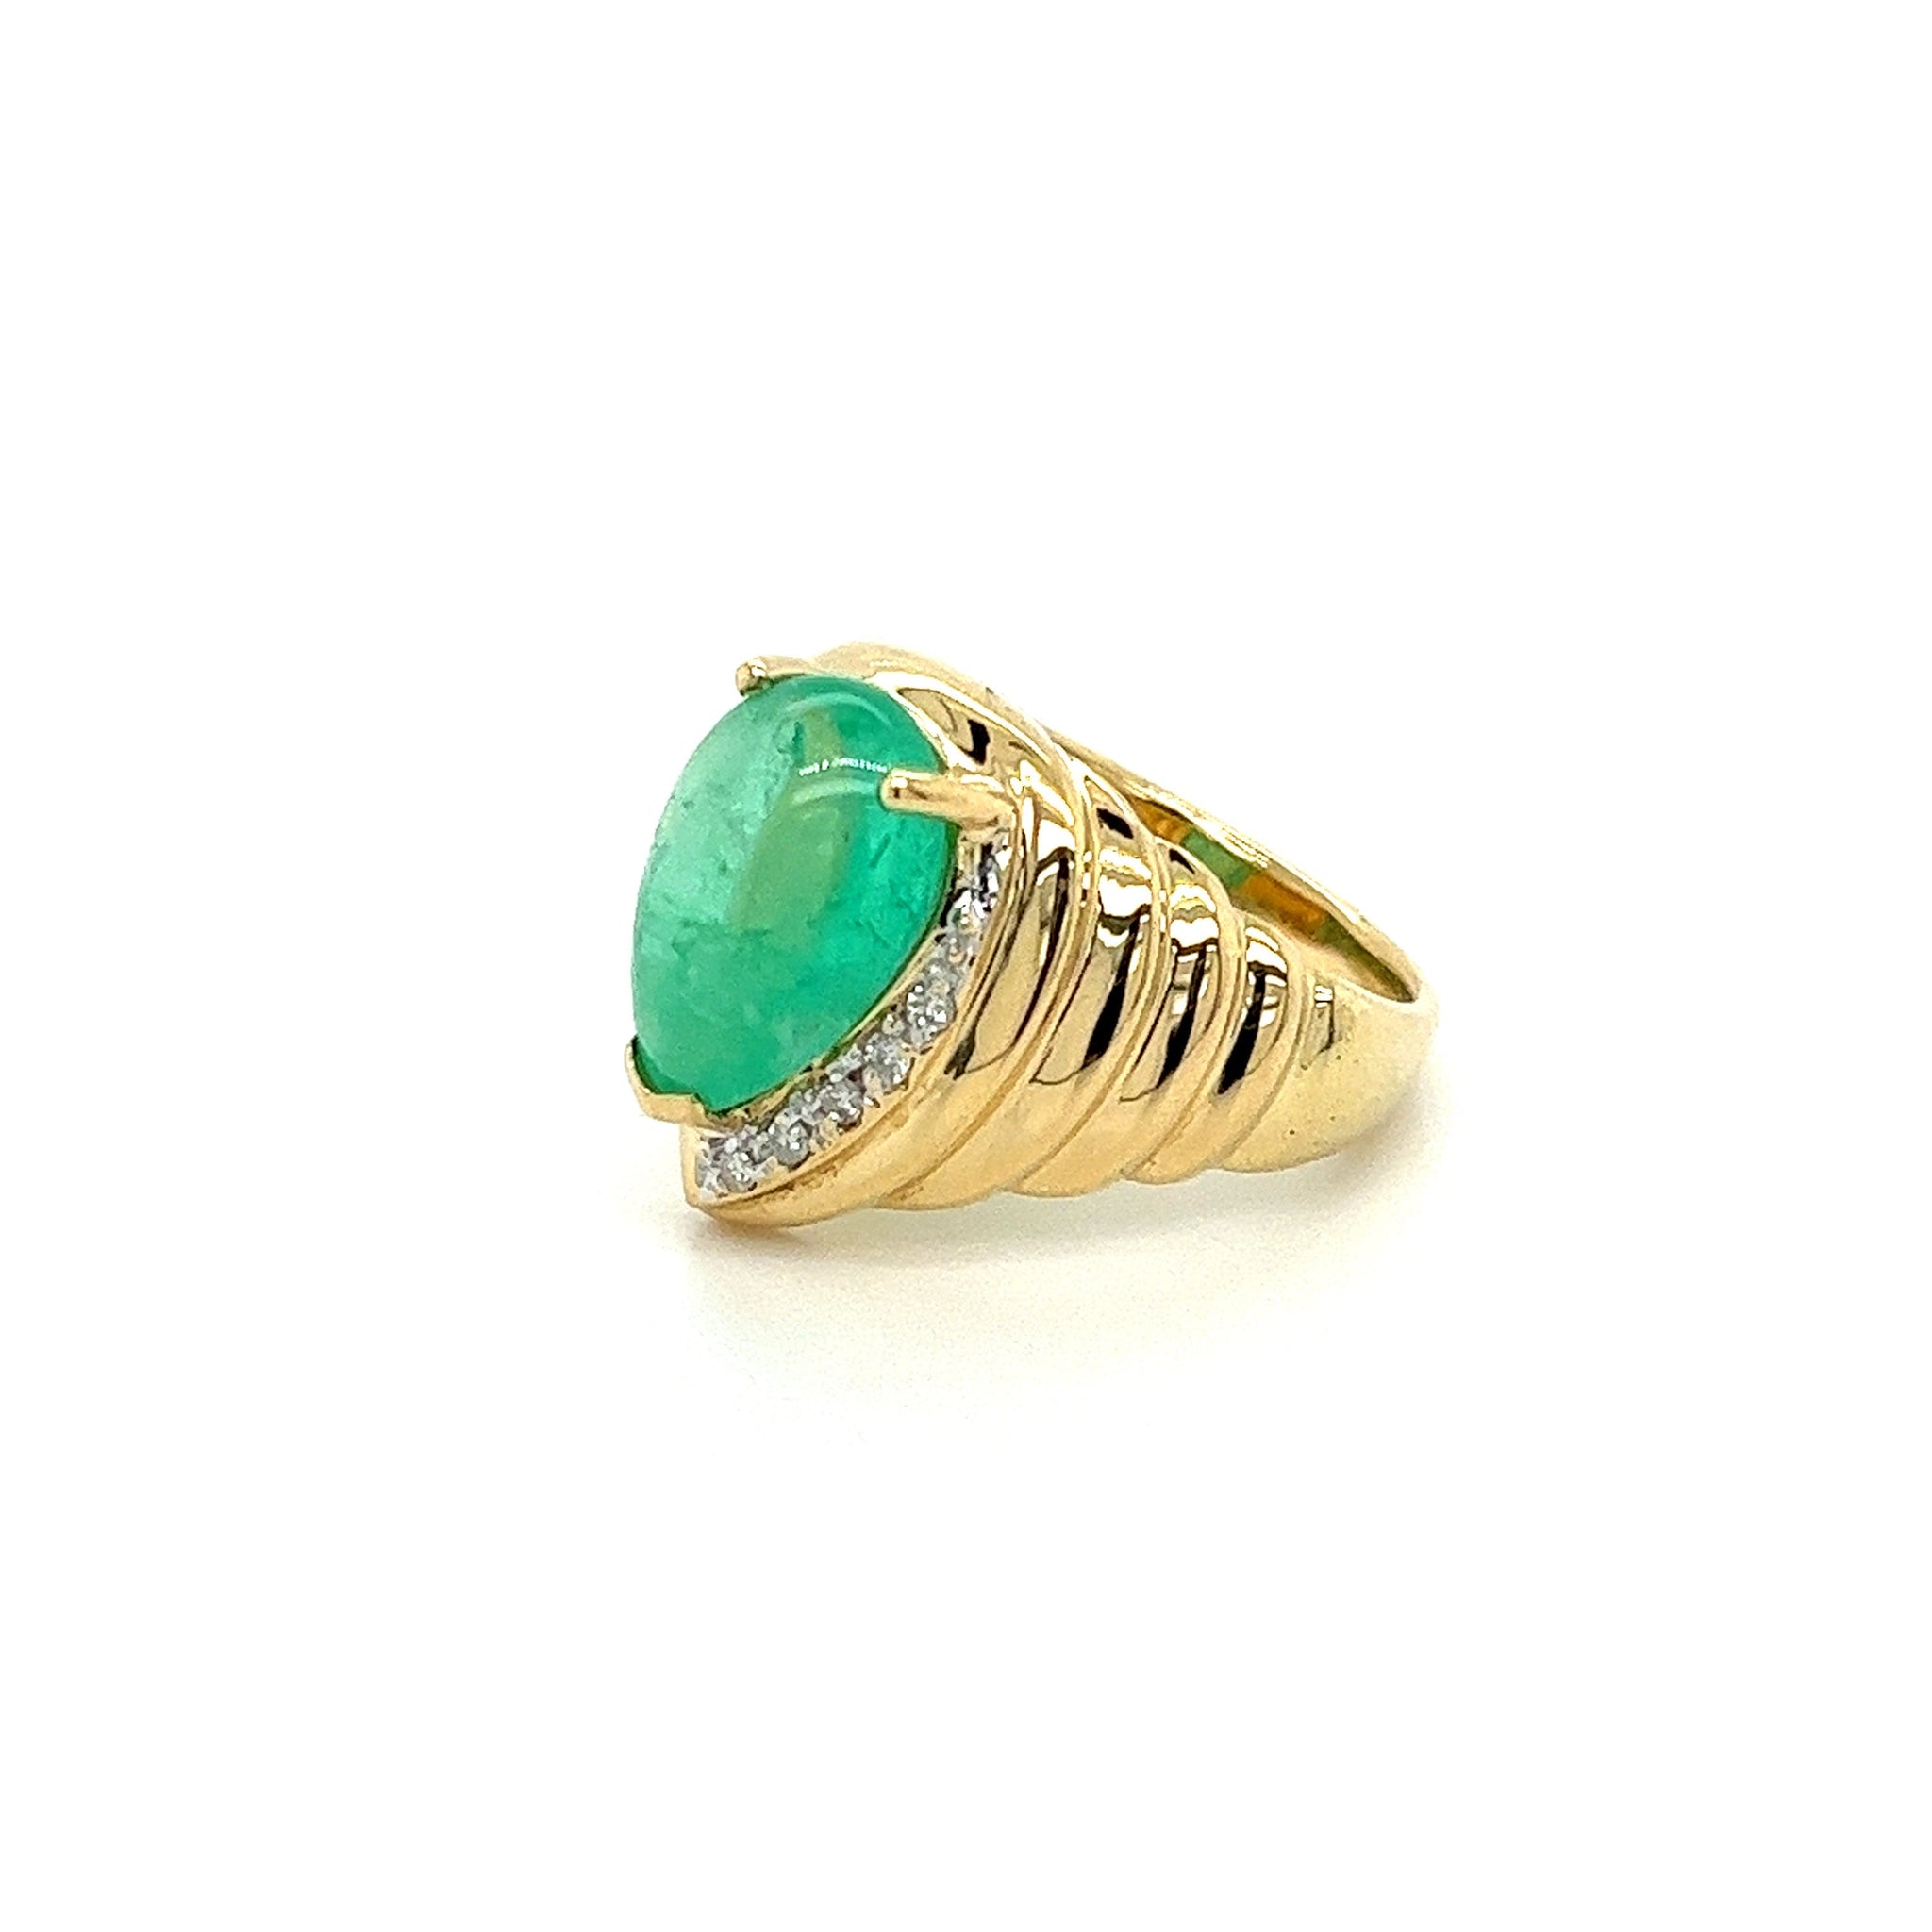 7.81 Carat Pear Shaped Cabochon Cut Natural Emerald & Diamond Ring in 18K Yellow Gold